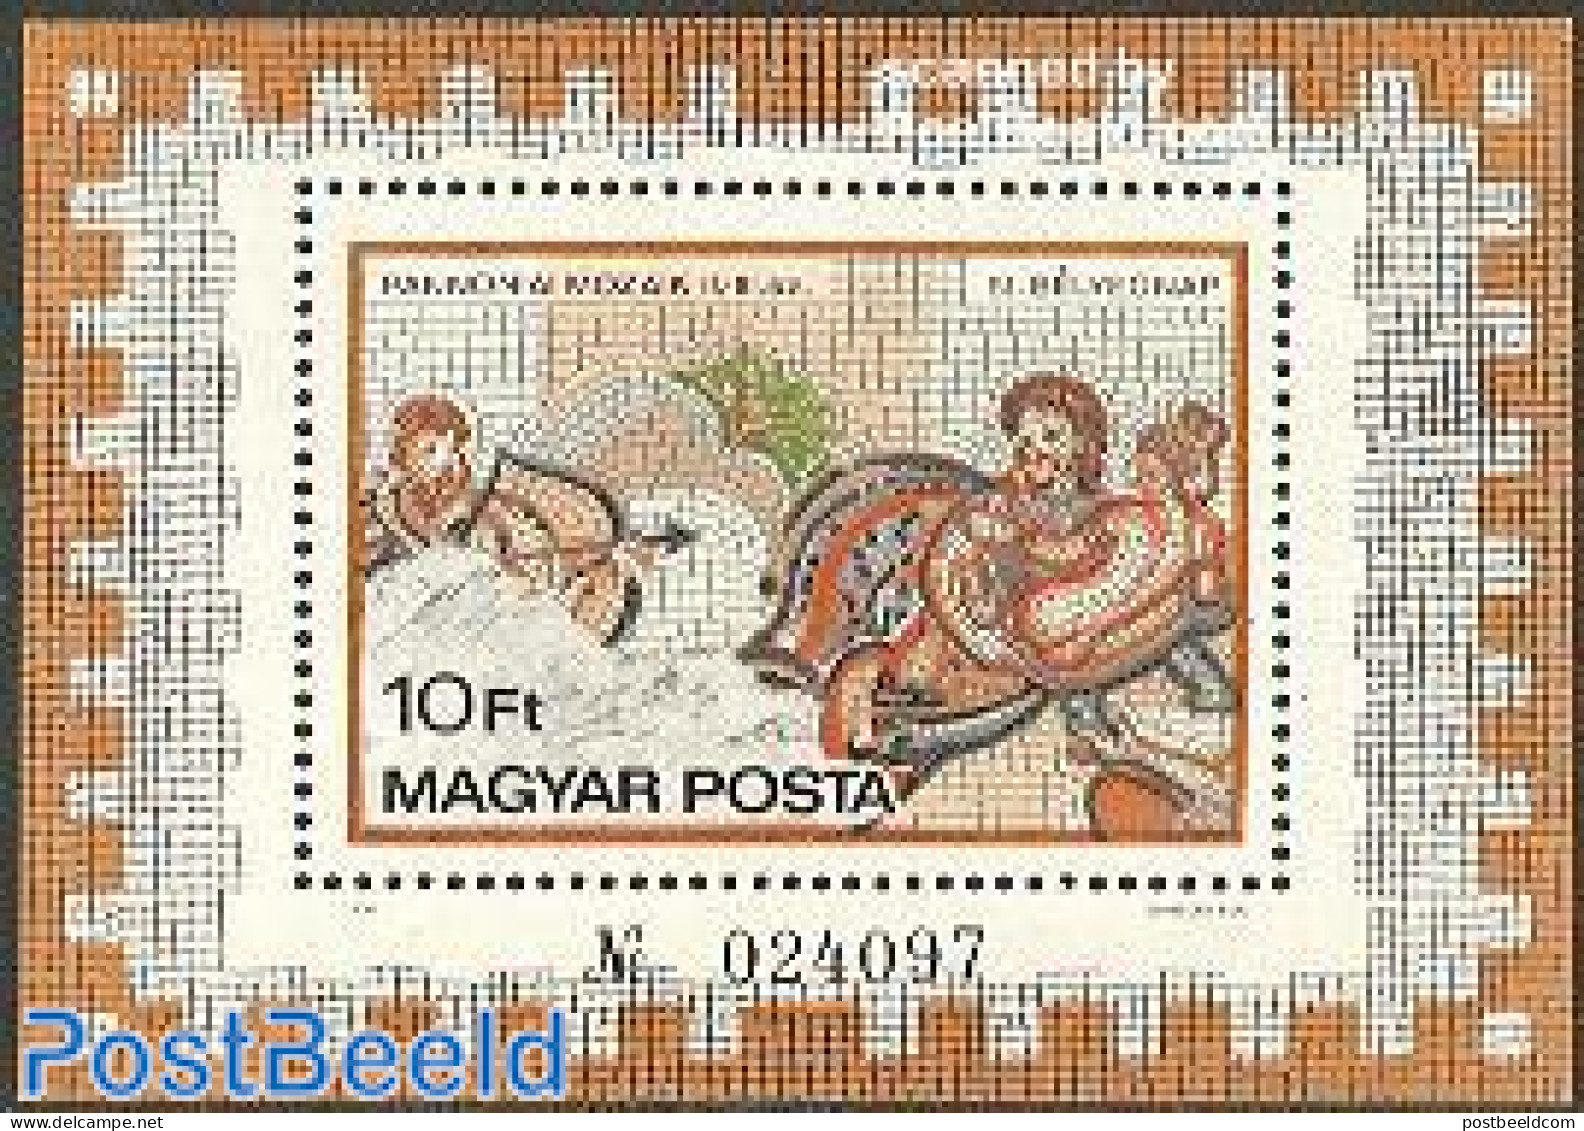 Hungary 1978 Stamp Day, Mosaics S/s, Mint NH, History - Archaeology - Stamp Day - Art - Mosaics - Ongebruikt